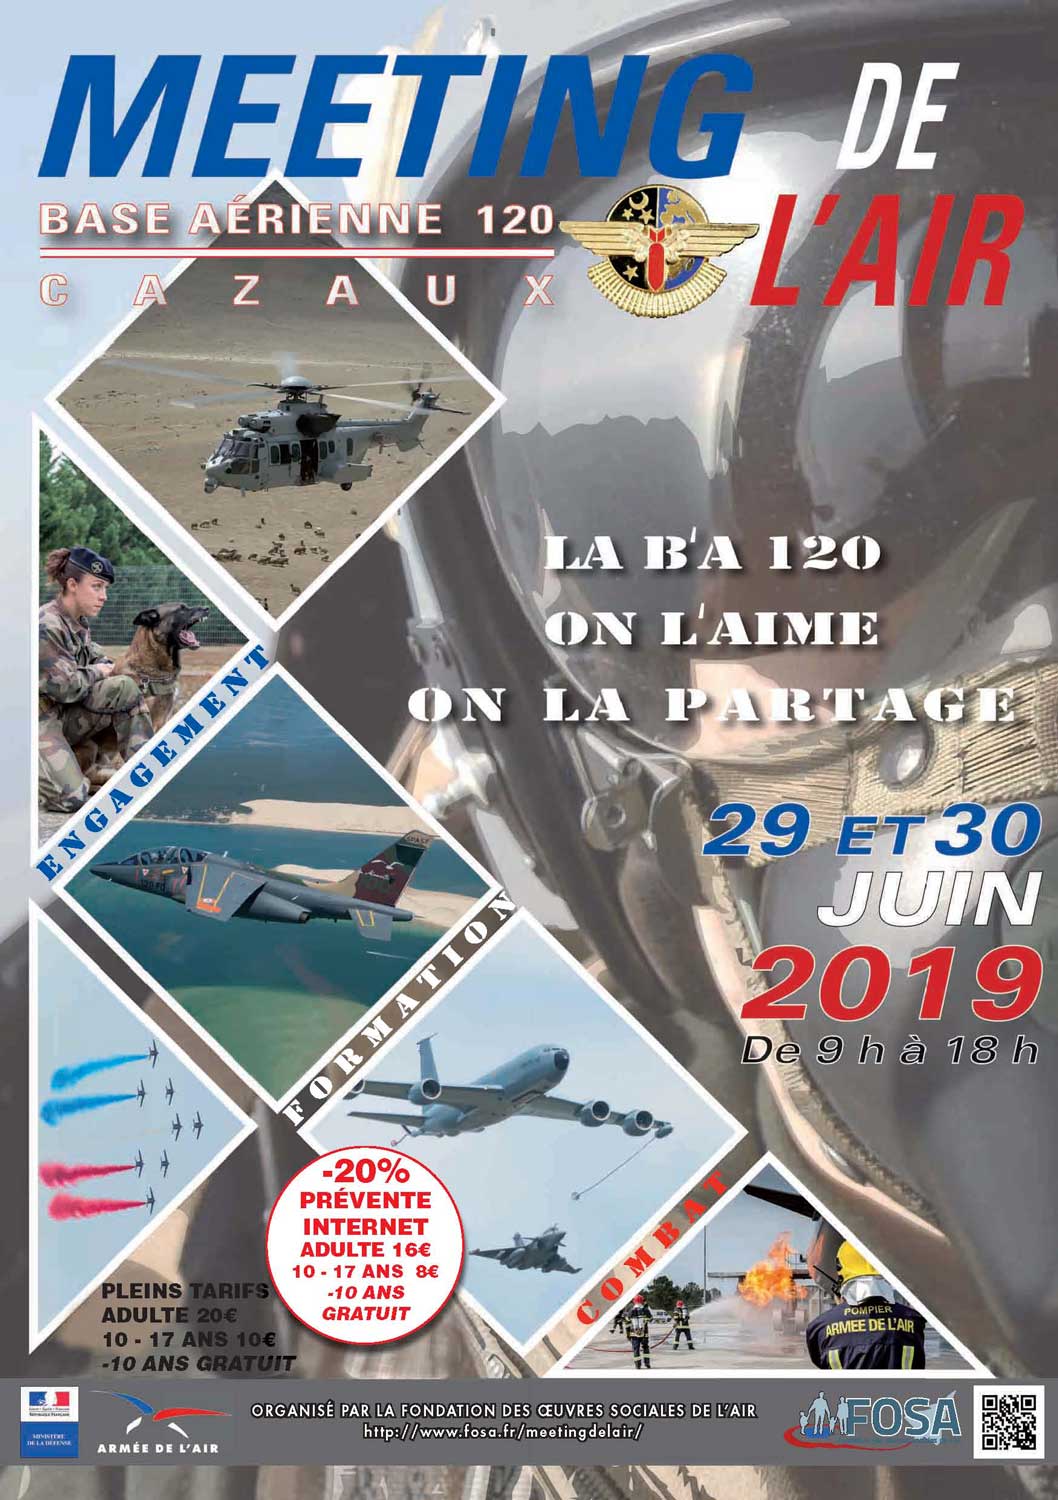 19 Air Show At The Cazaux Air Base Passion News